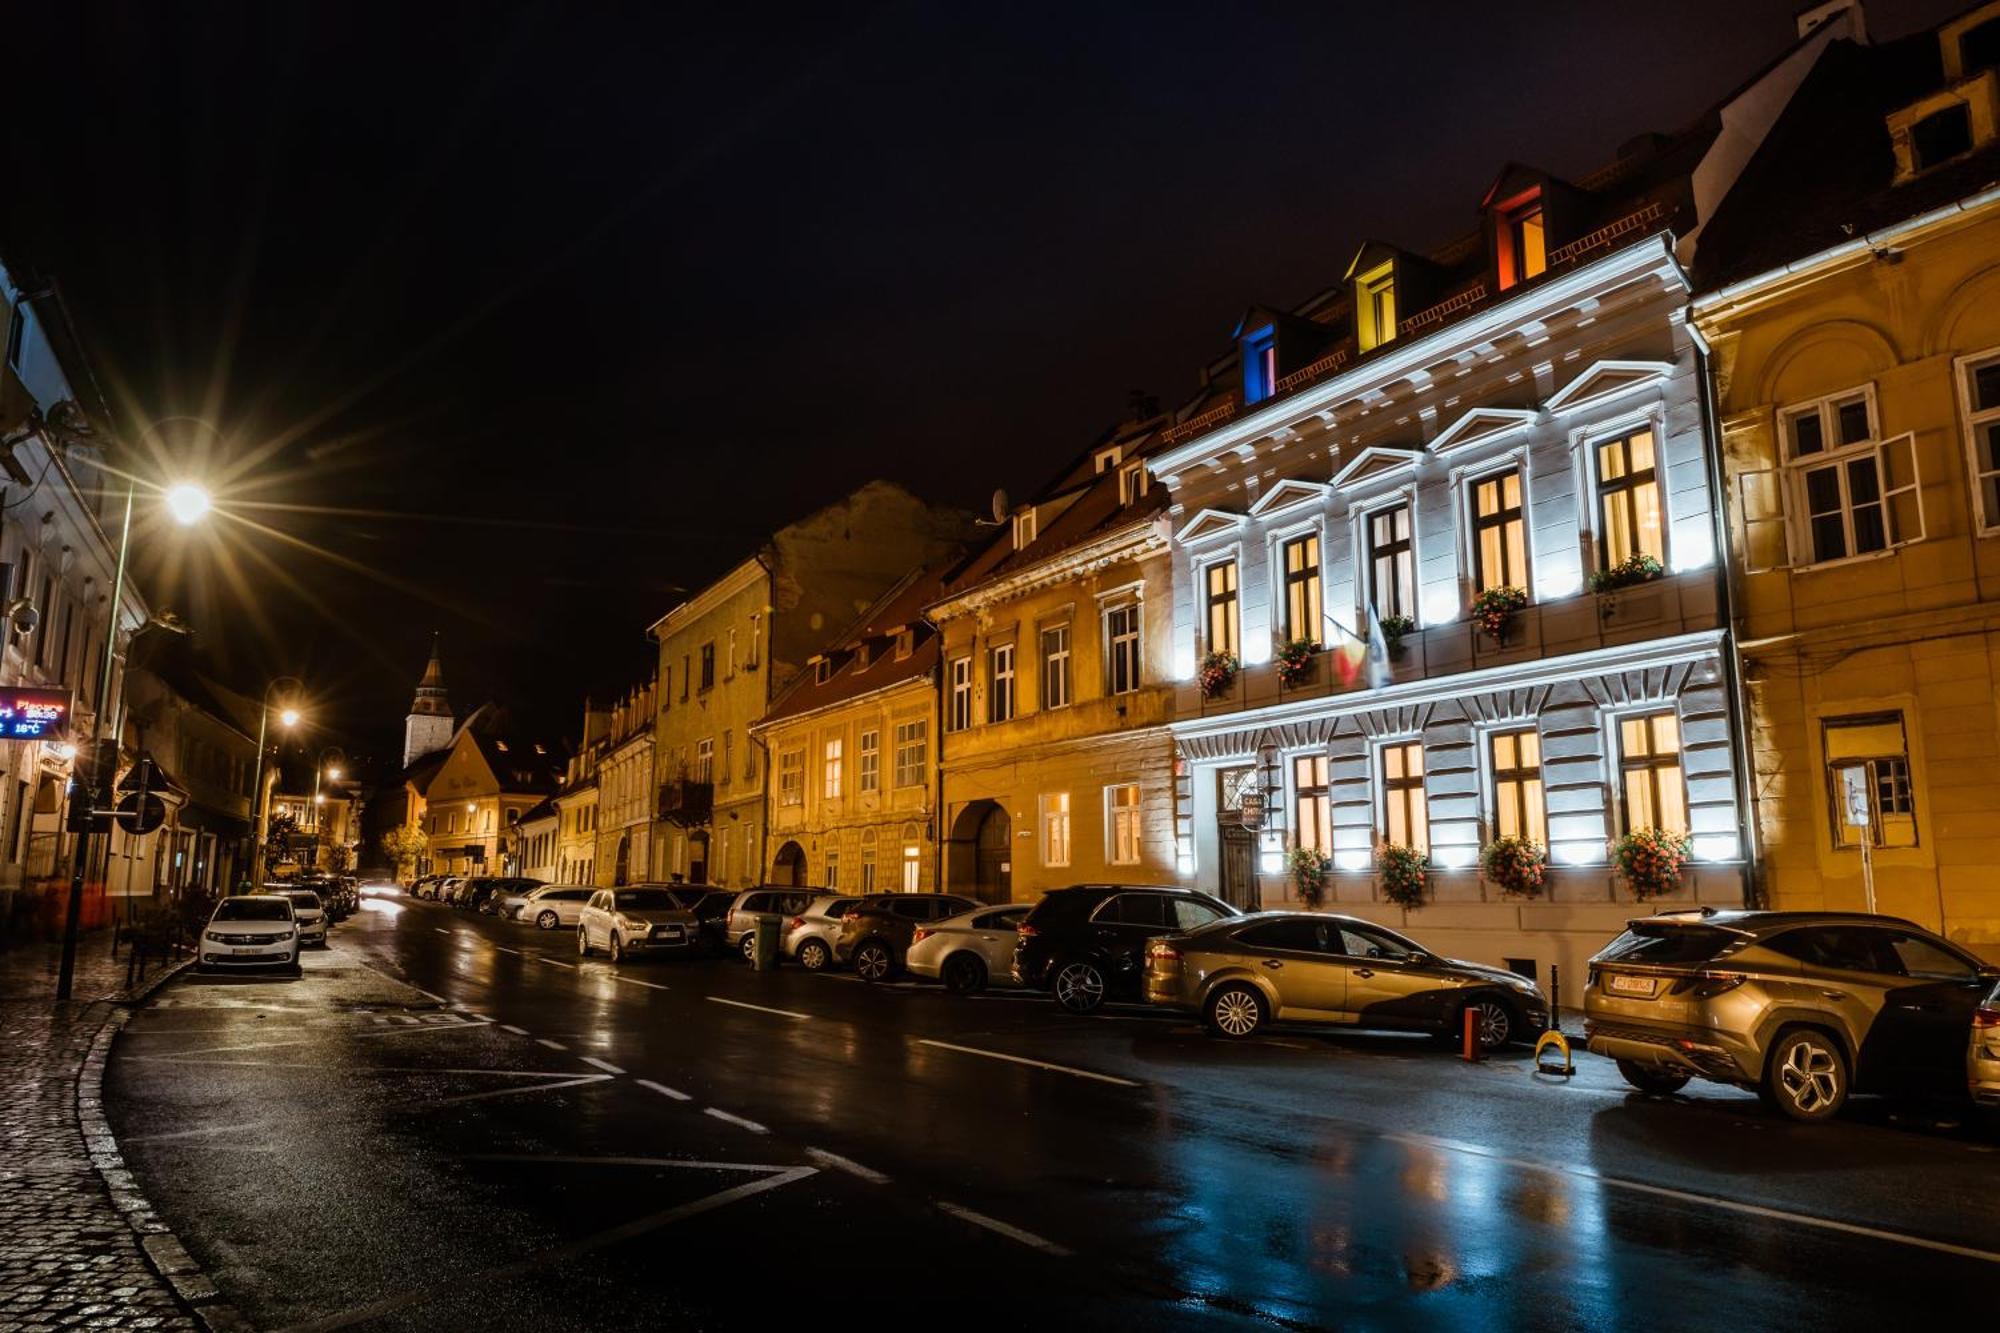 Casa Chitic - Hotel & Restaurant- Str Nicolae Balcescu 13 Brasov Exterior photo